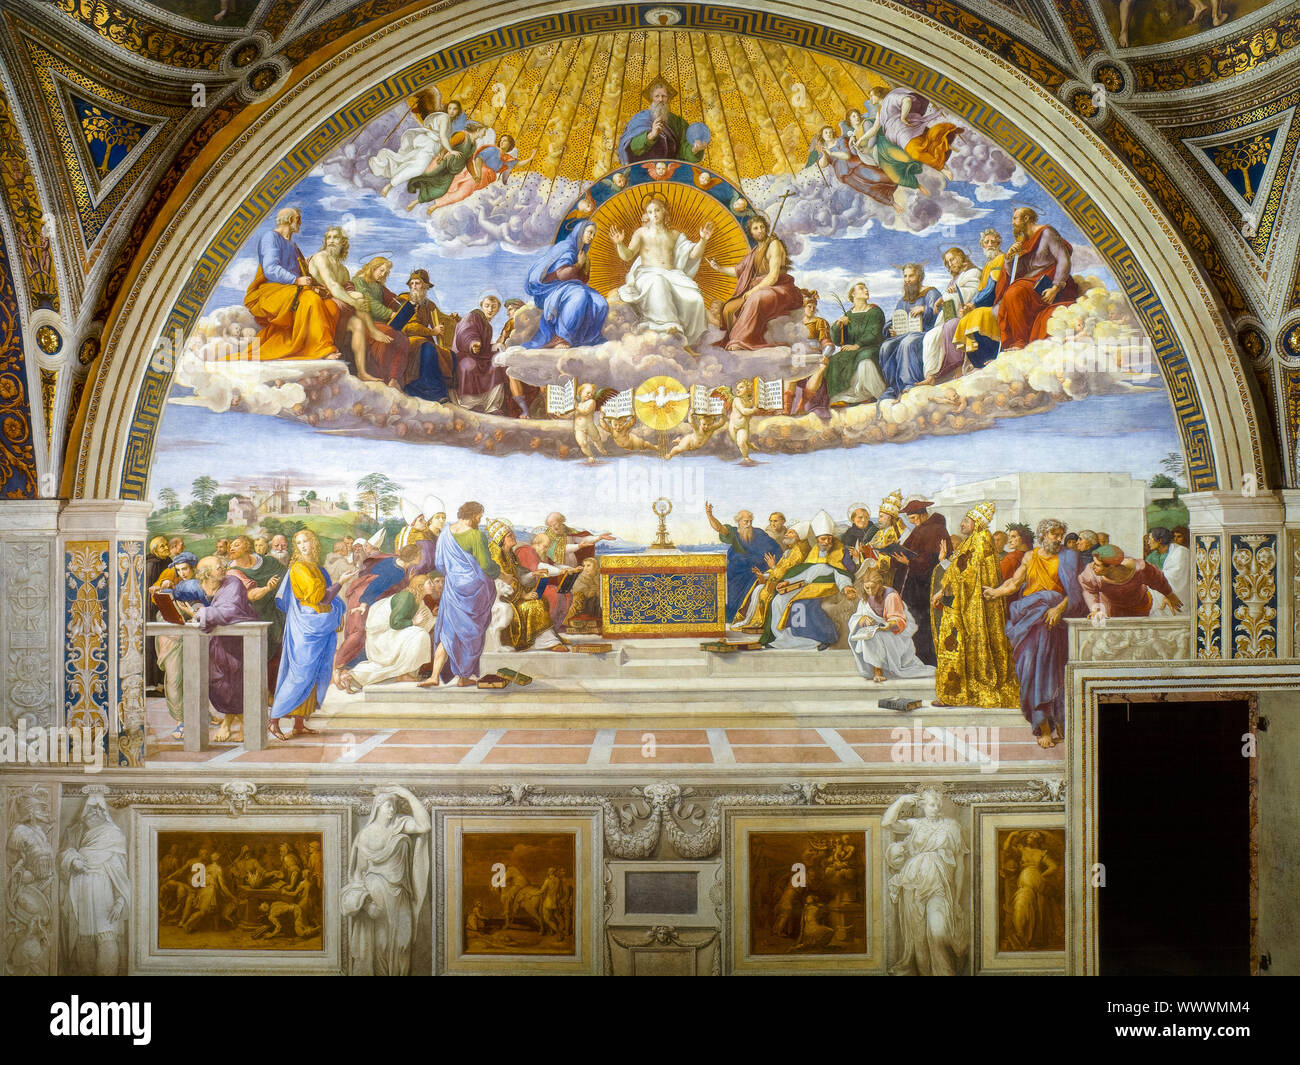 Raphael, Disputation of Holy Sacrament, fresco painting, 1509 Stock Photo